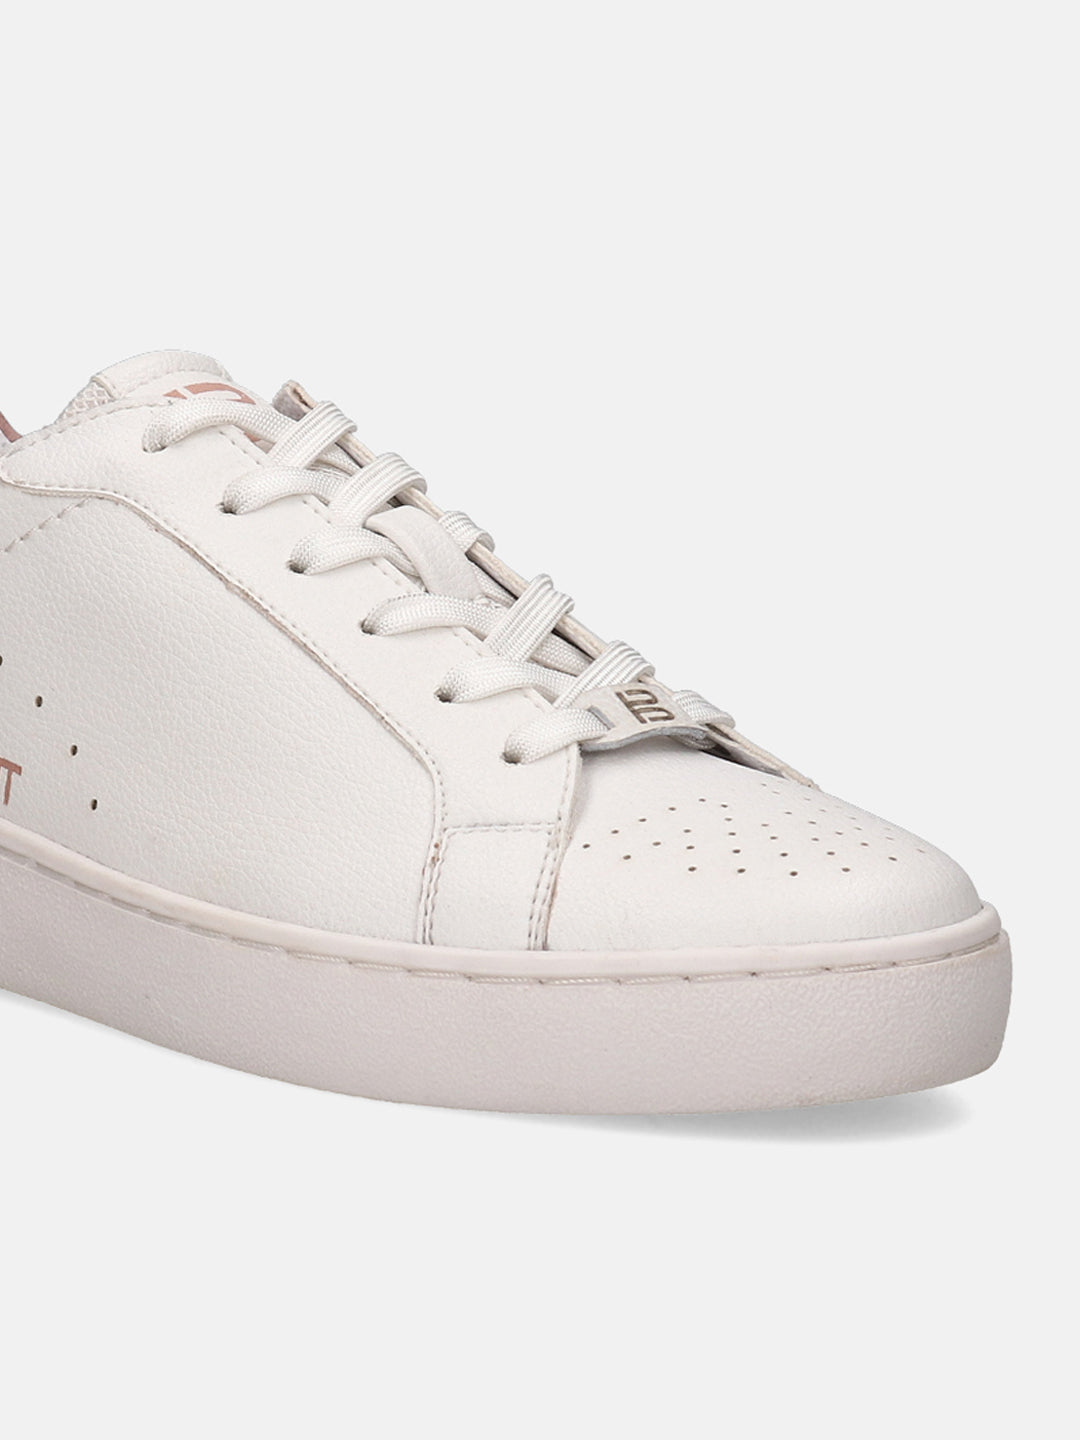 Ferly White Animal Print Sneakers